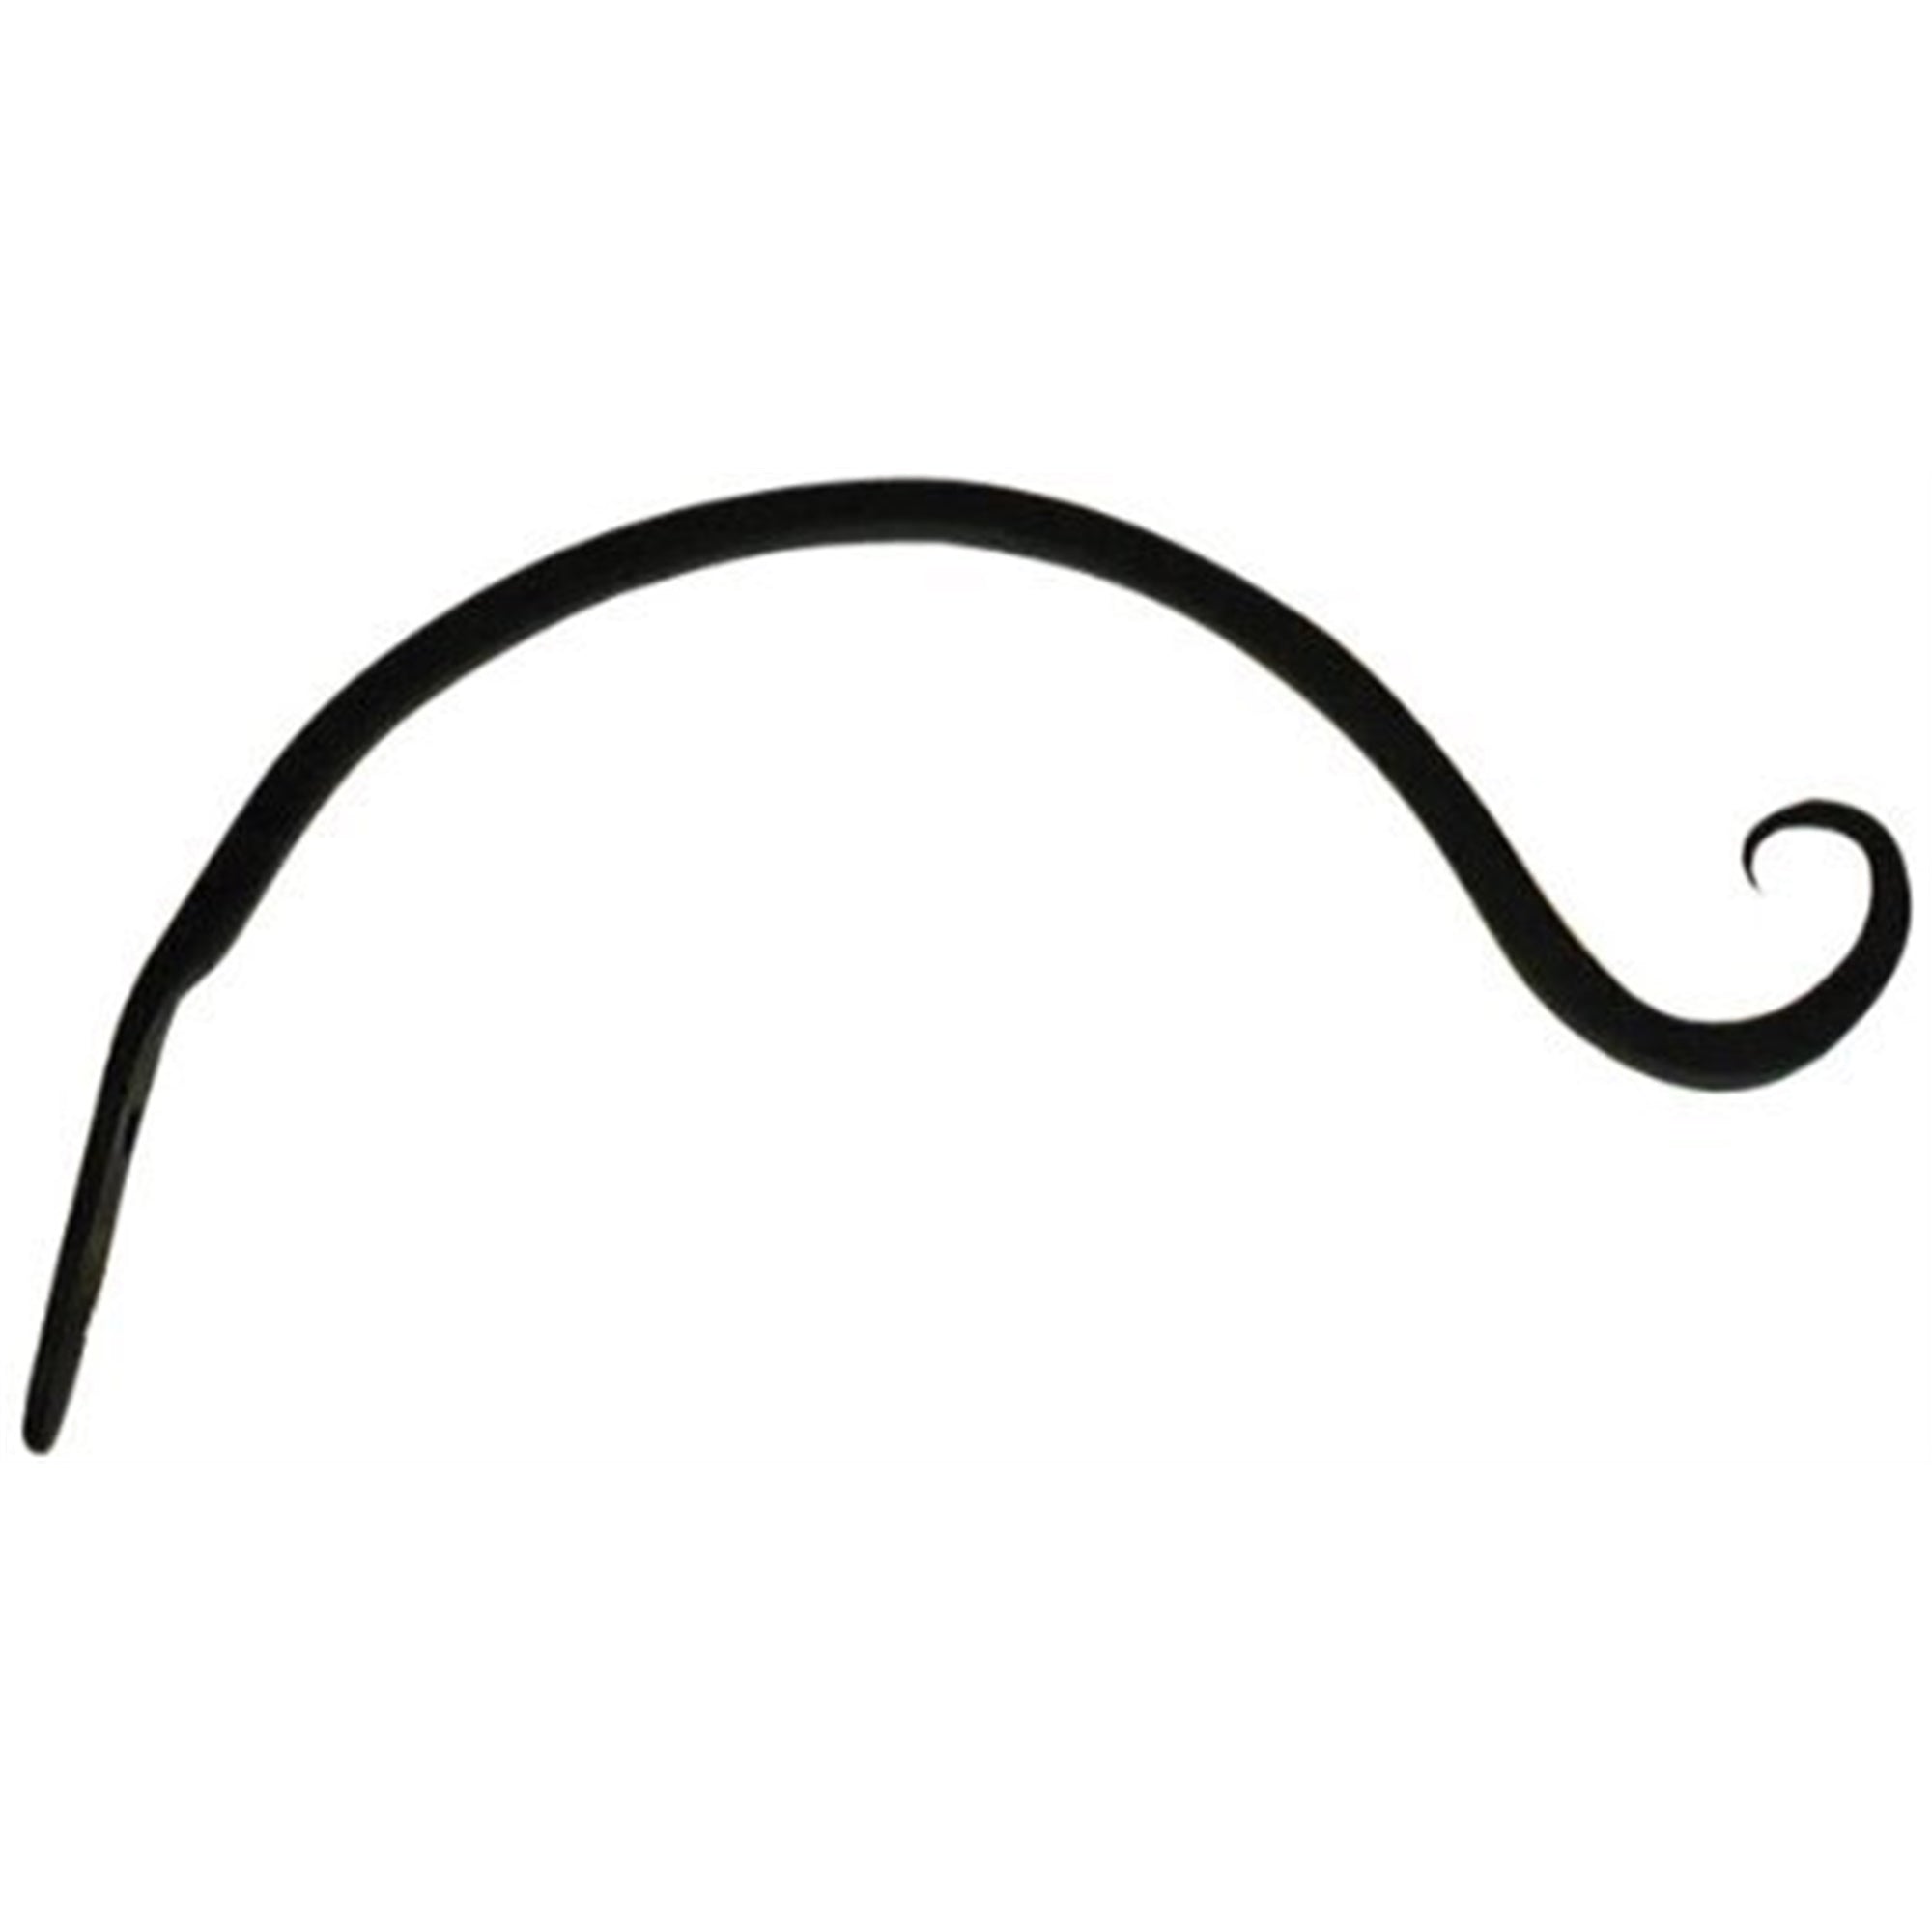 Hookery Curved Hanger with Upturned Hook, Black, 9-Inch